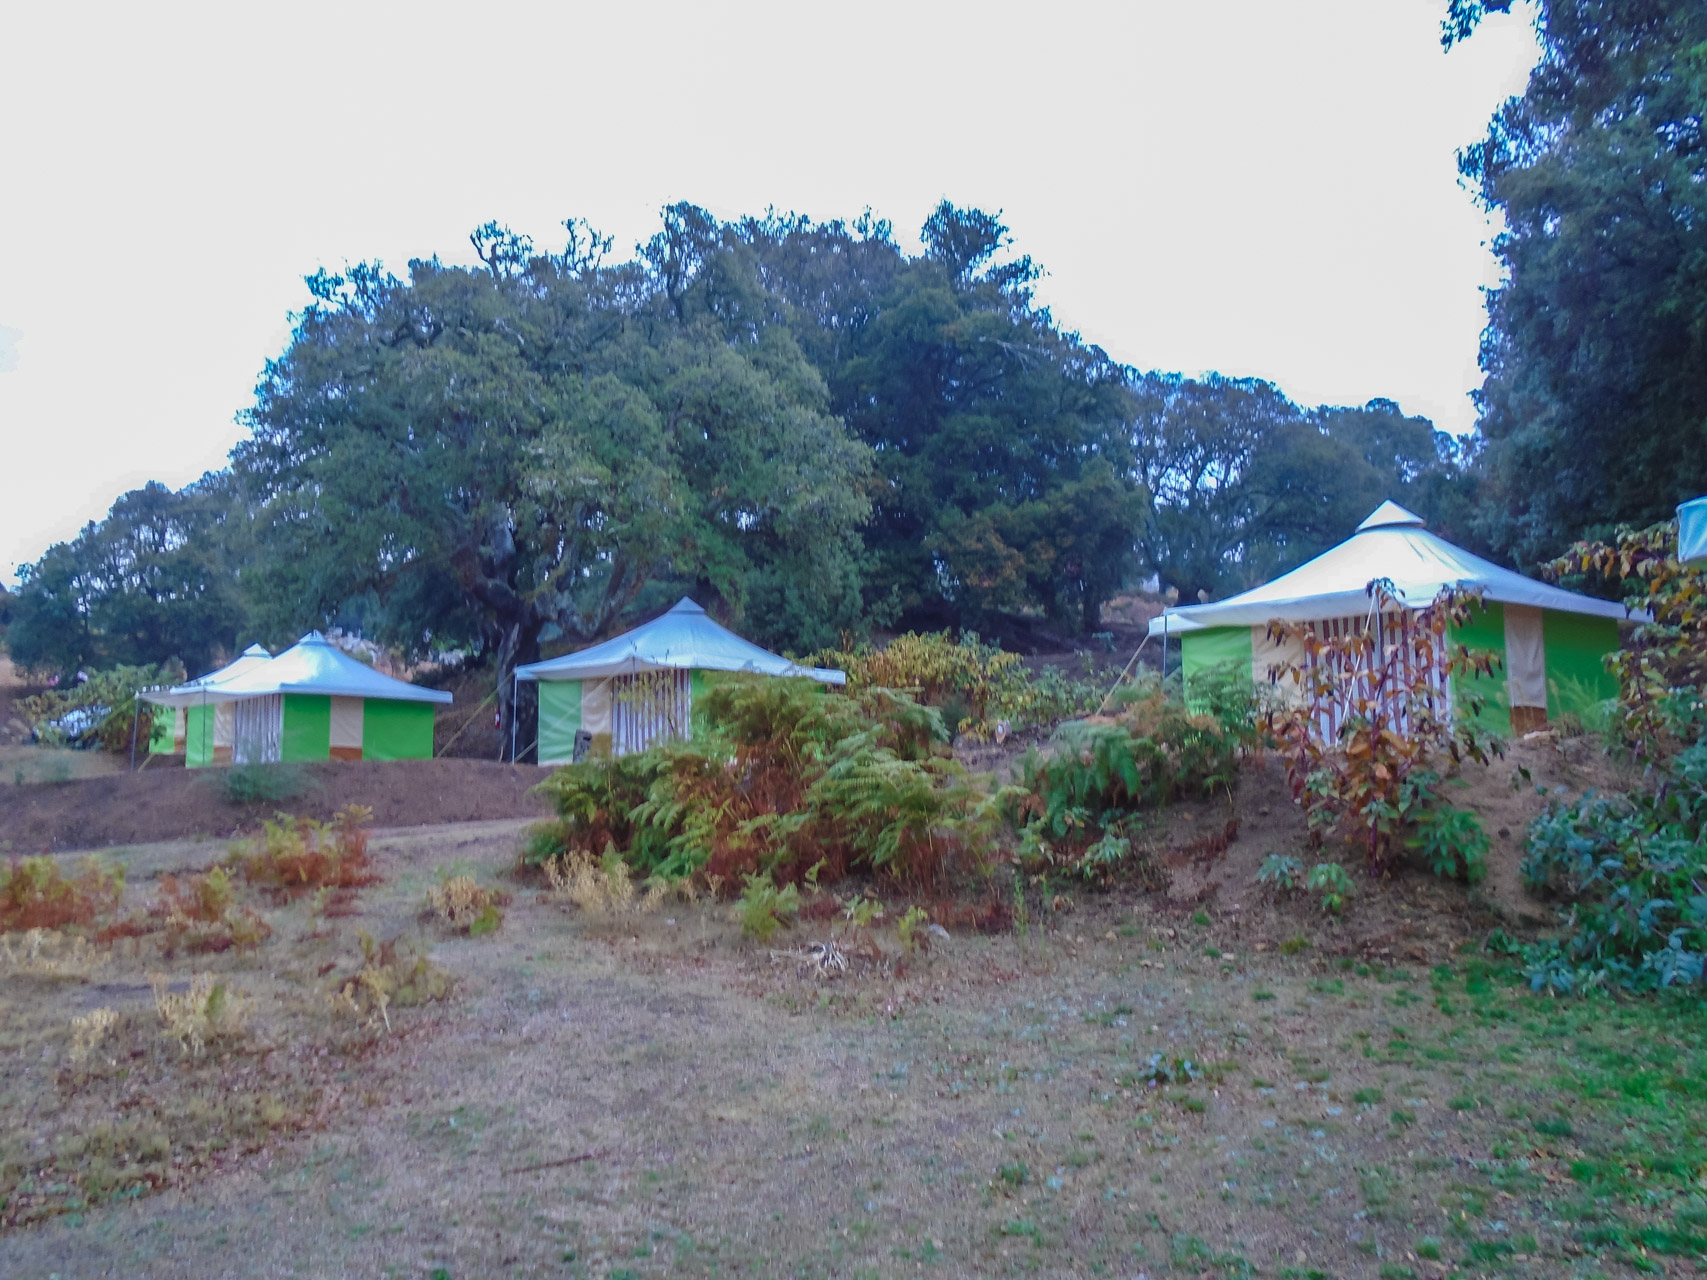 Camping I Suvari